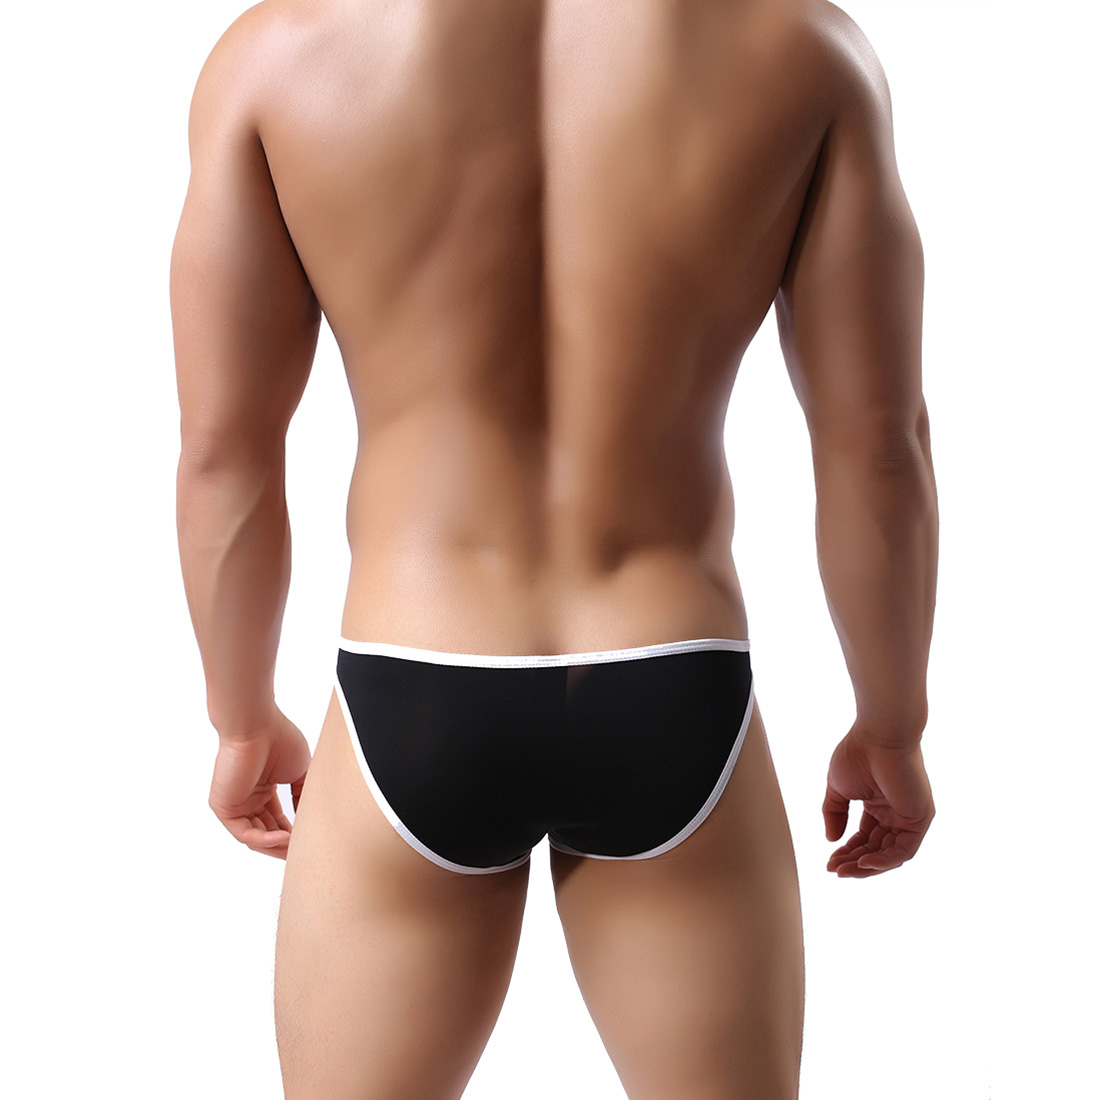 Men's Lingerie Underwear Sexy Briefs Triangle Pants Shorts WH46 Black XL